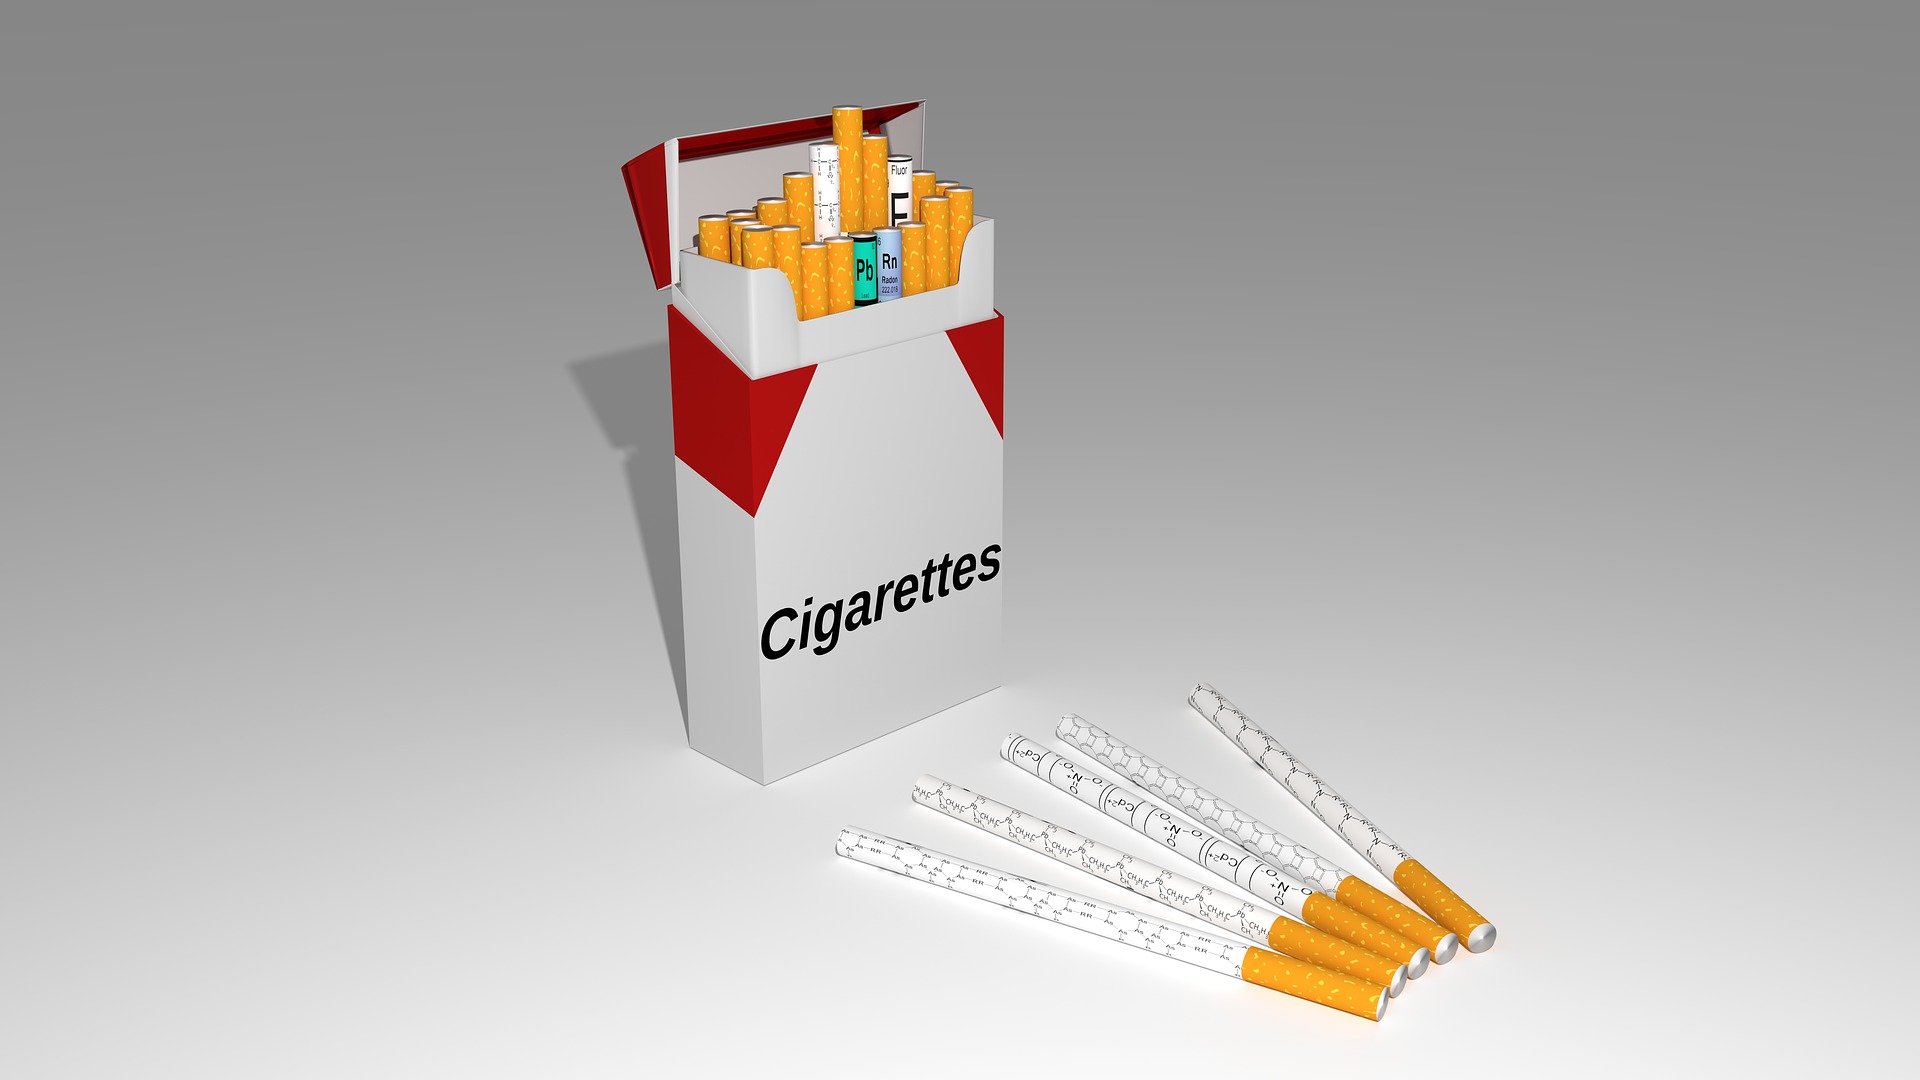 cigarettes-g93c992843_1920.jpg